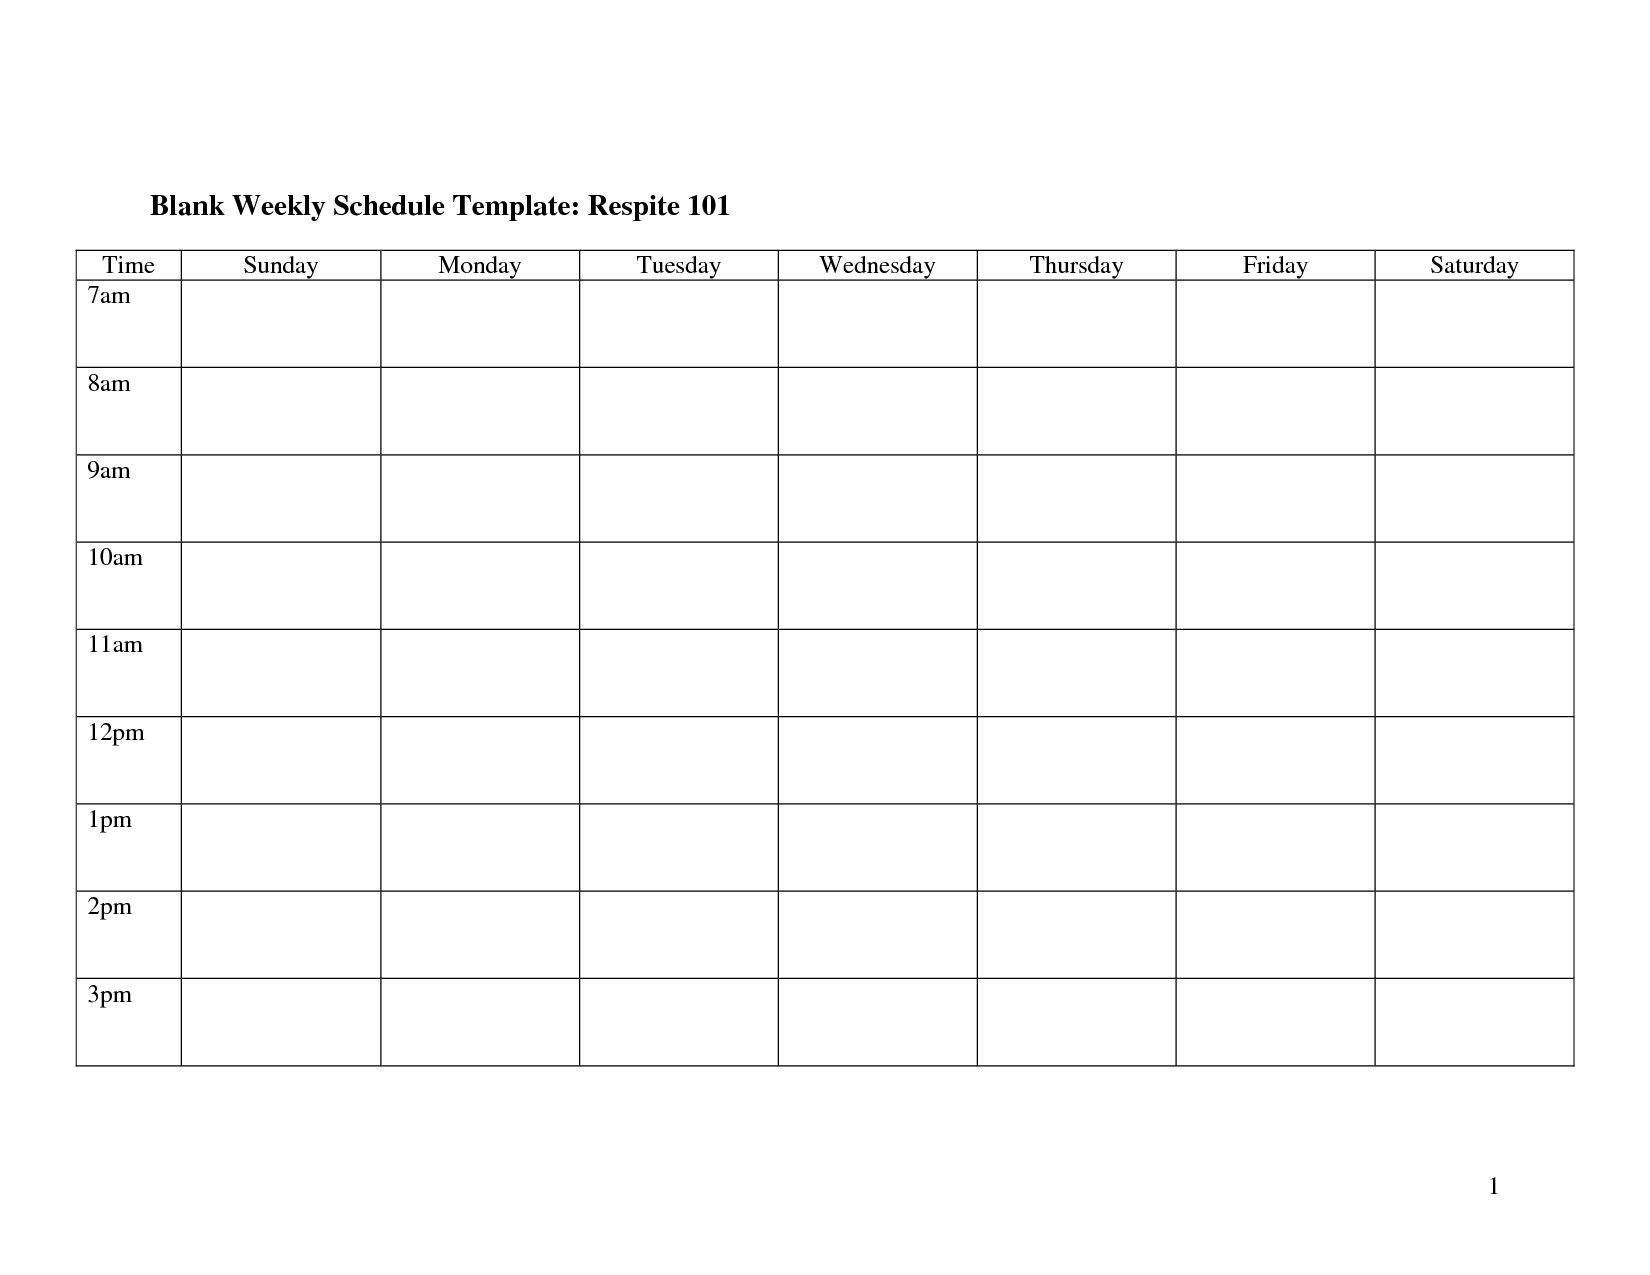 15 Blank Schedule Template Images - Blank Weekly Work